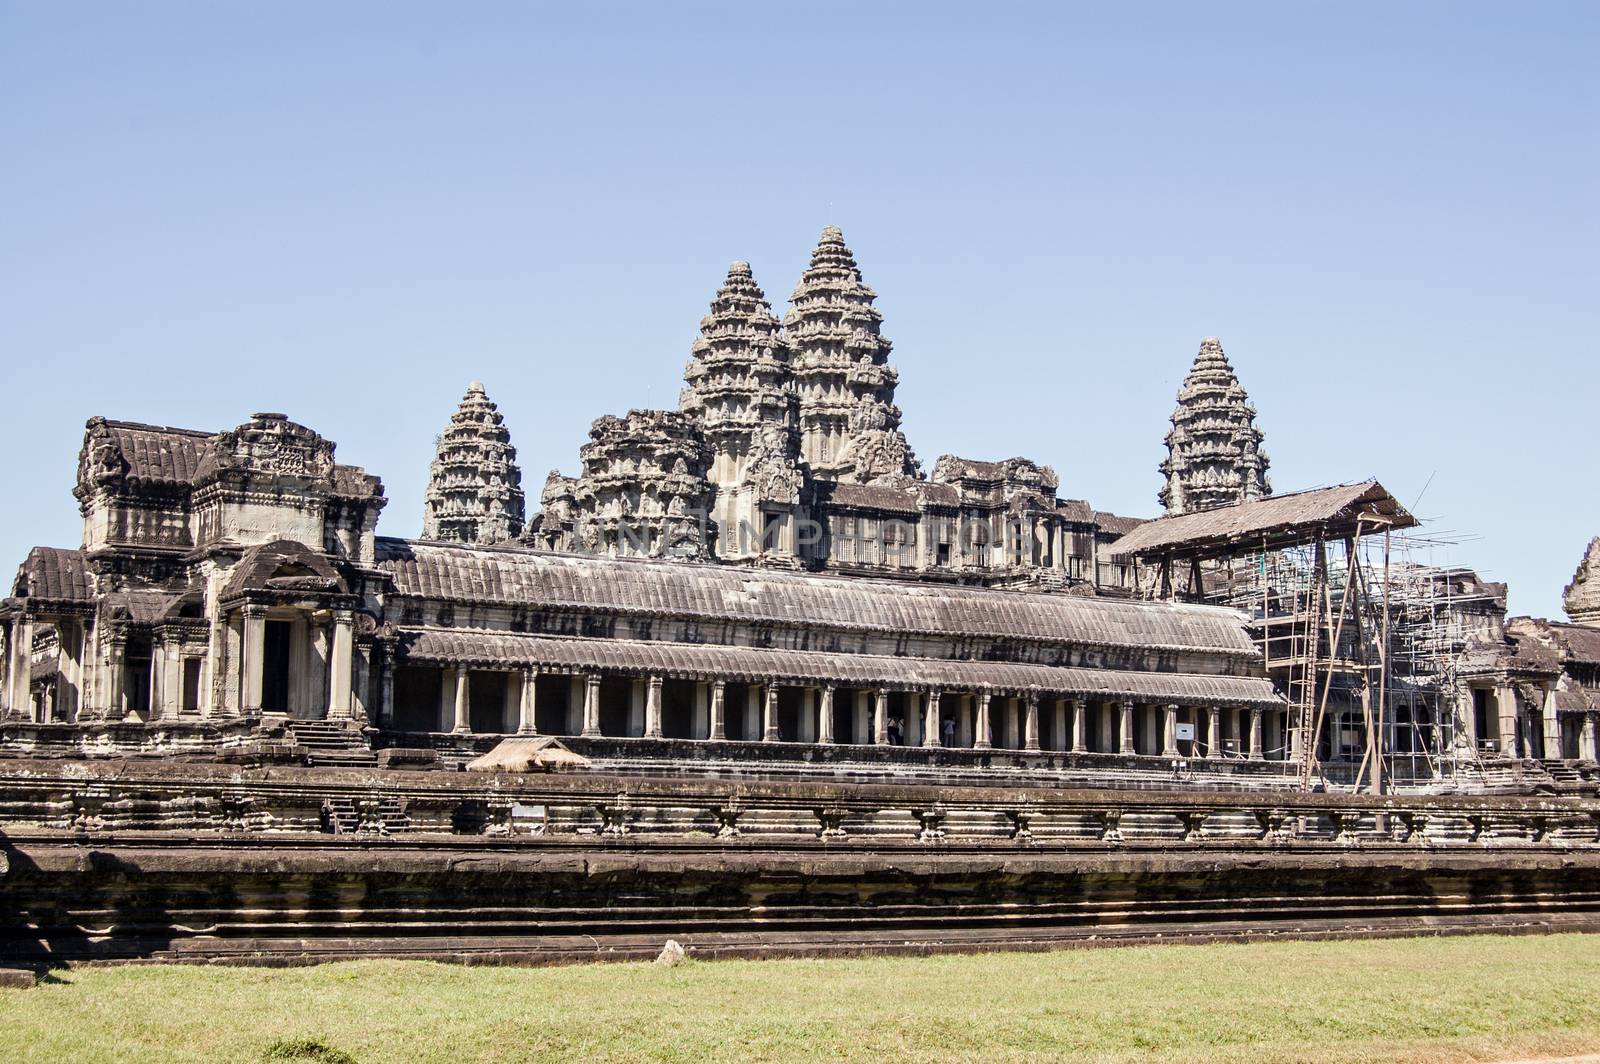 Angkor Wat temple, Cambodia by BasPhoto